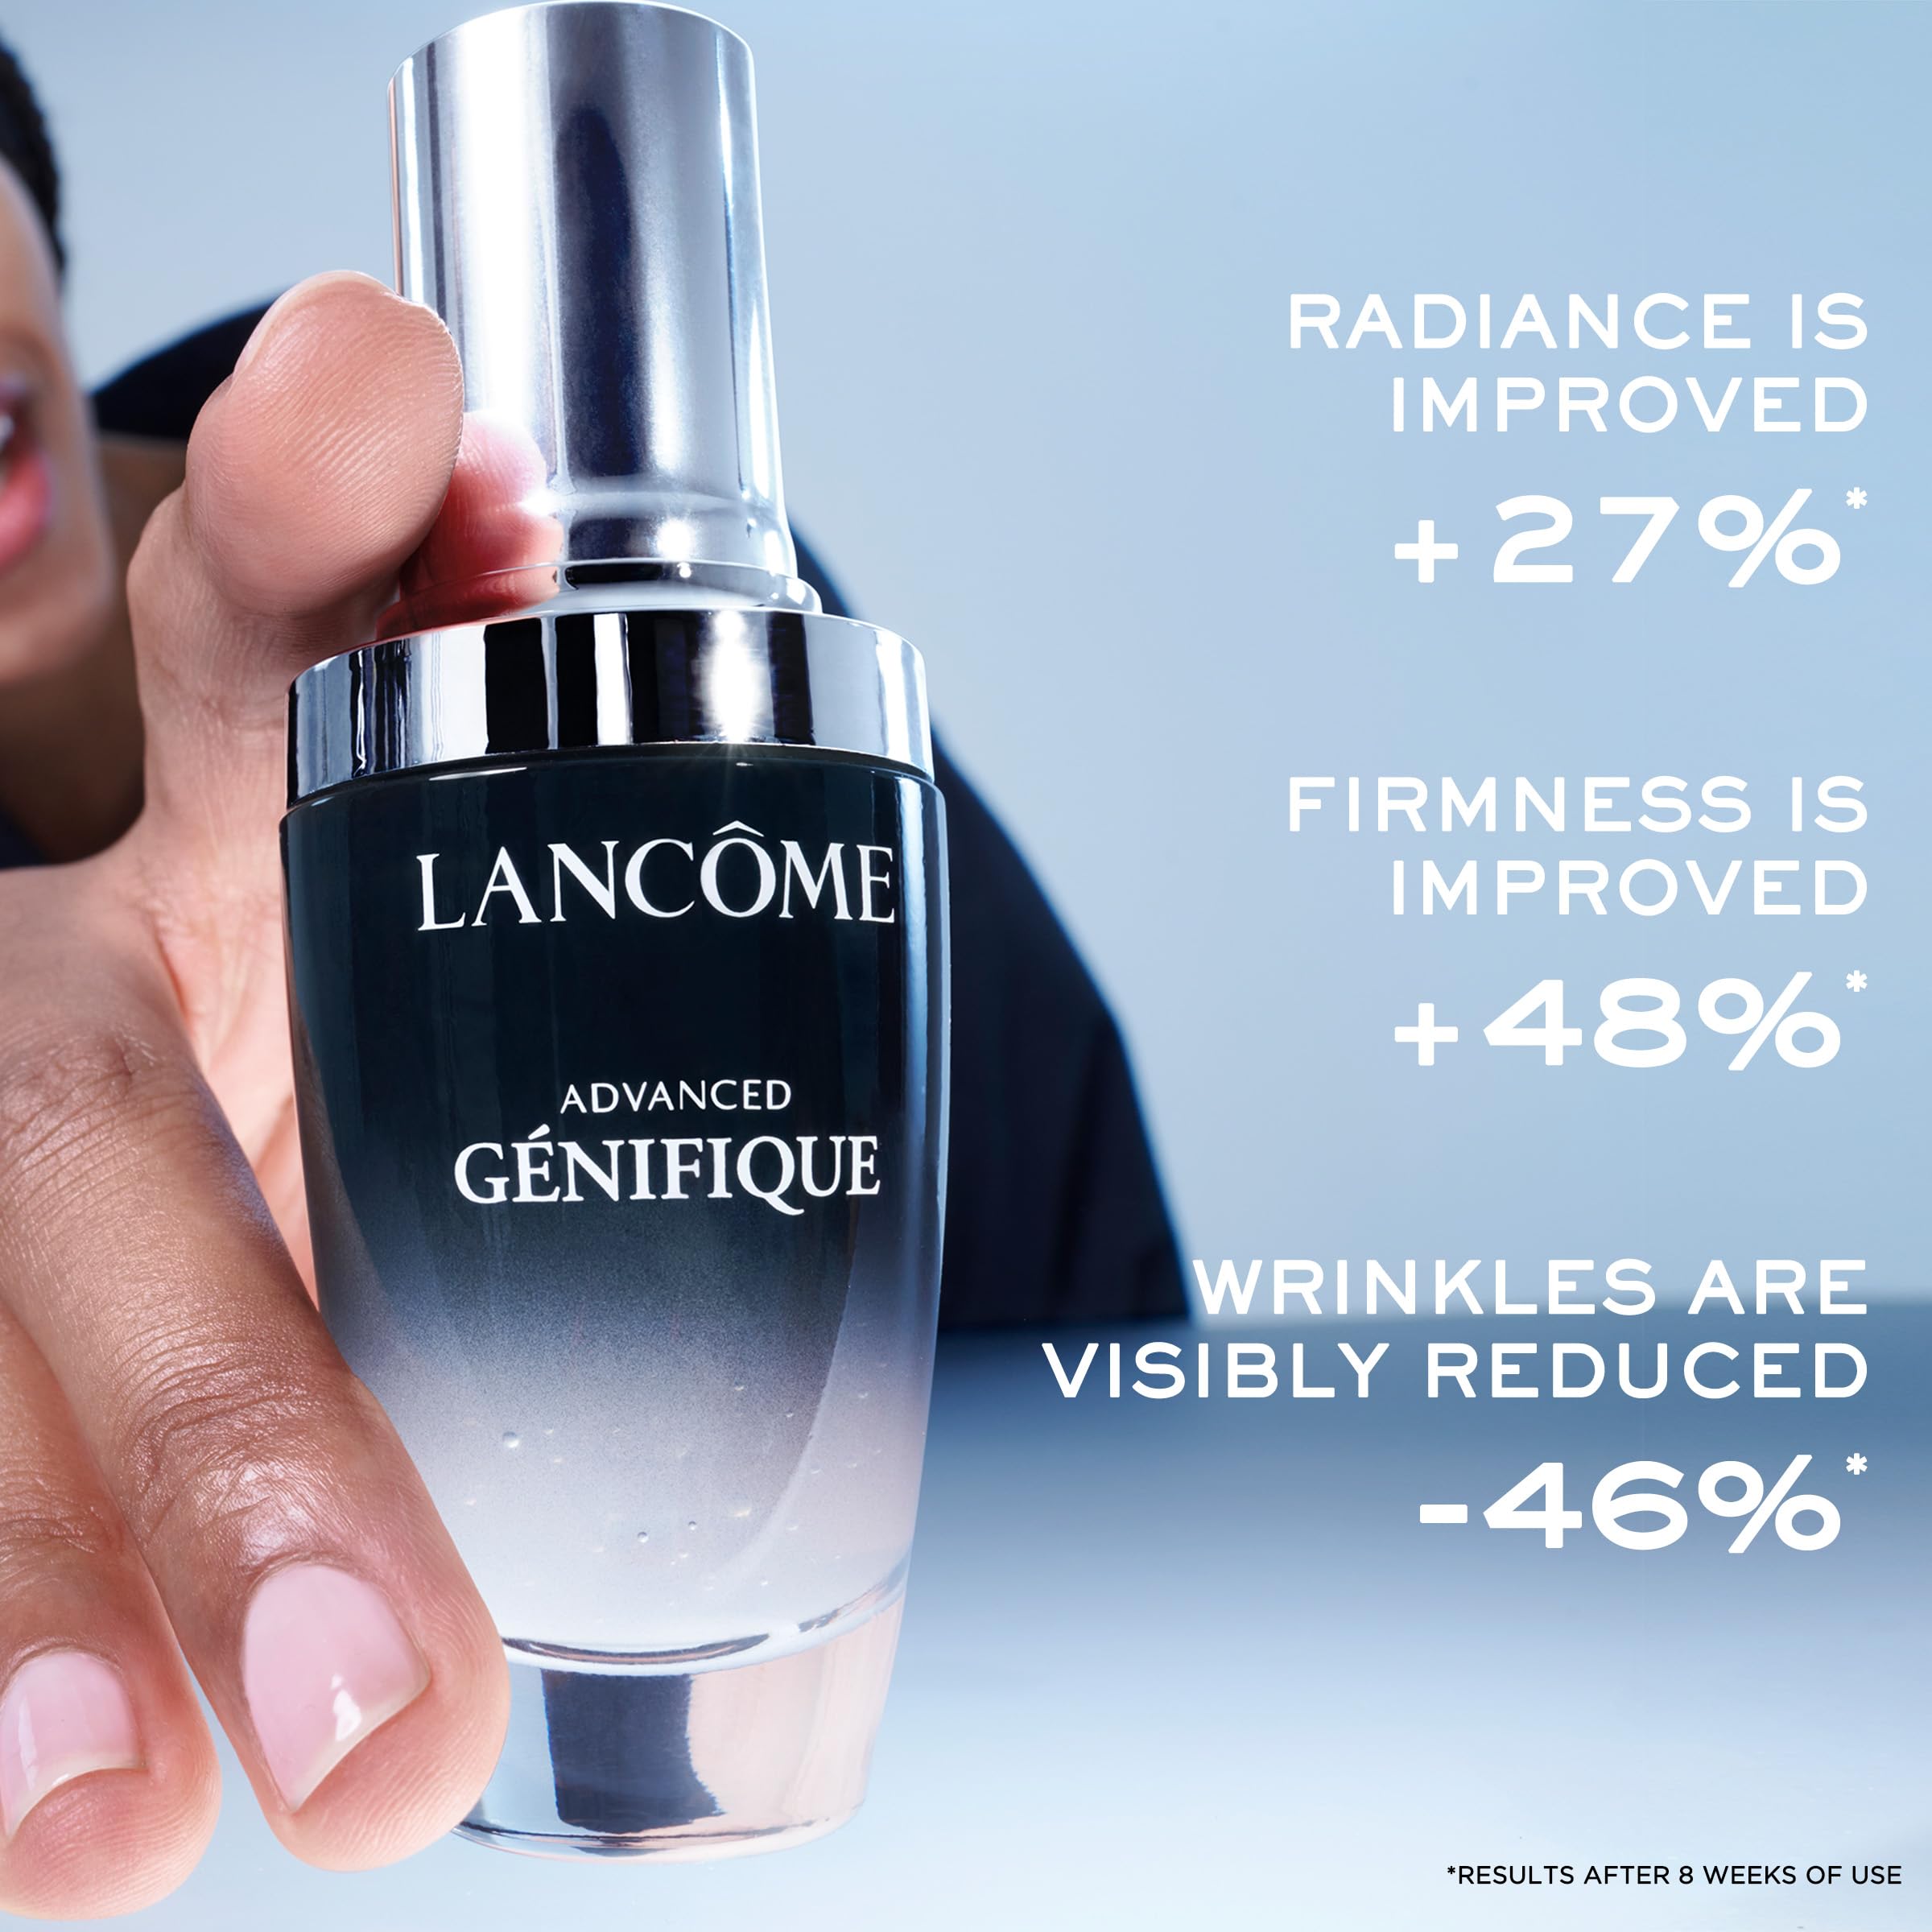 Lancôme Advanced Génifique Face Serum - For Fine Lines & Boosts Radiance - With Bifidus Prebiotic, Hyaluronic Acid & Vitamin Cg